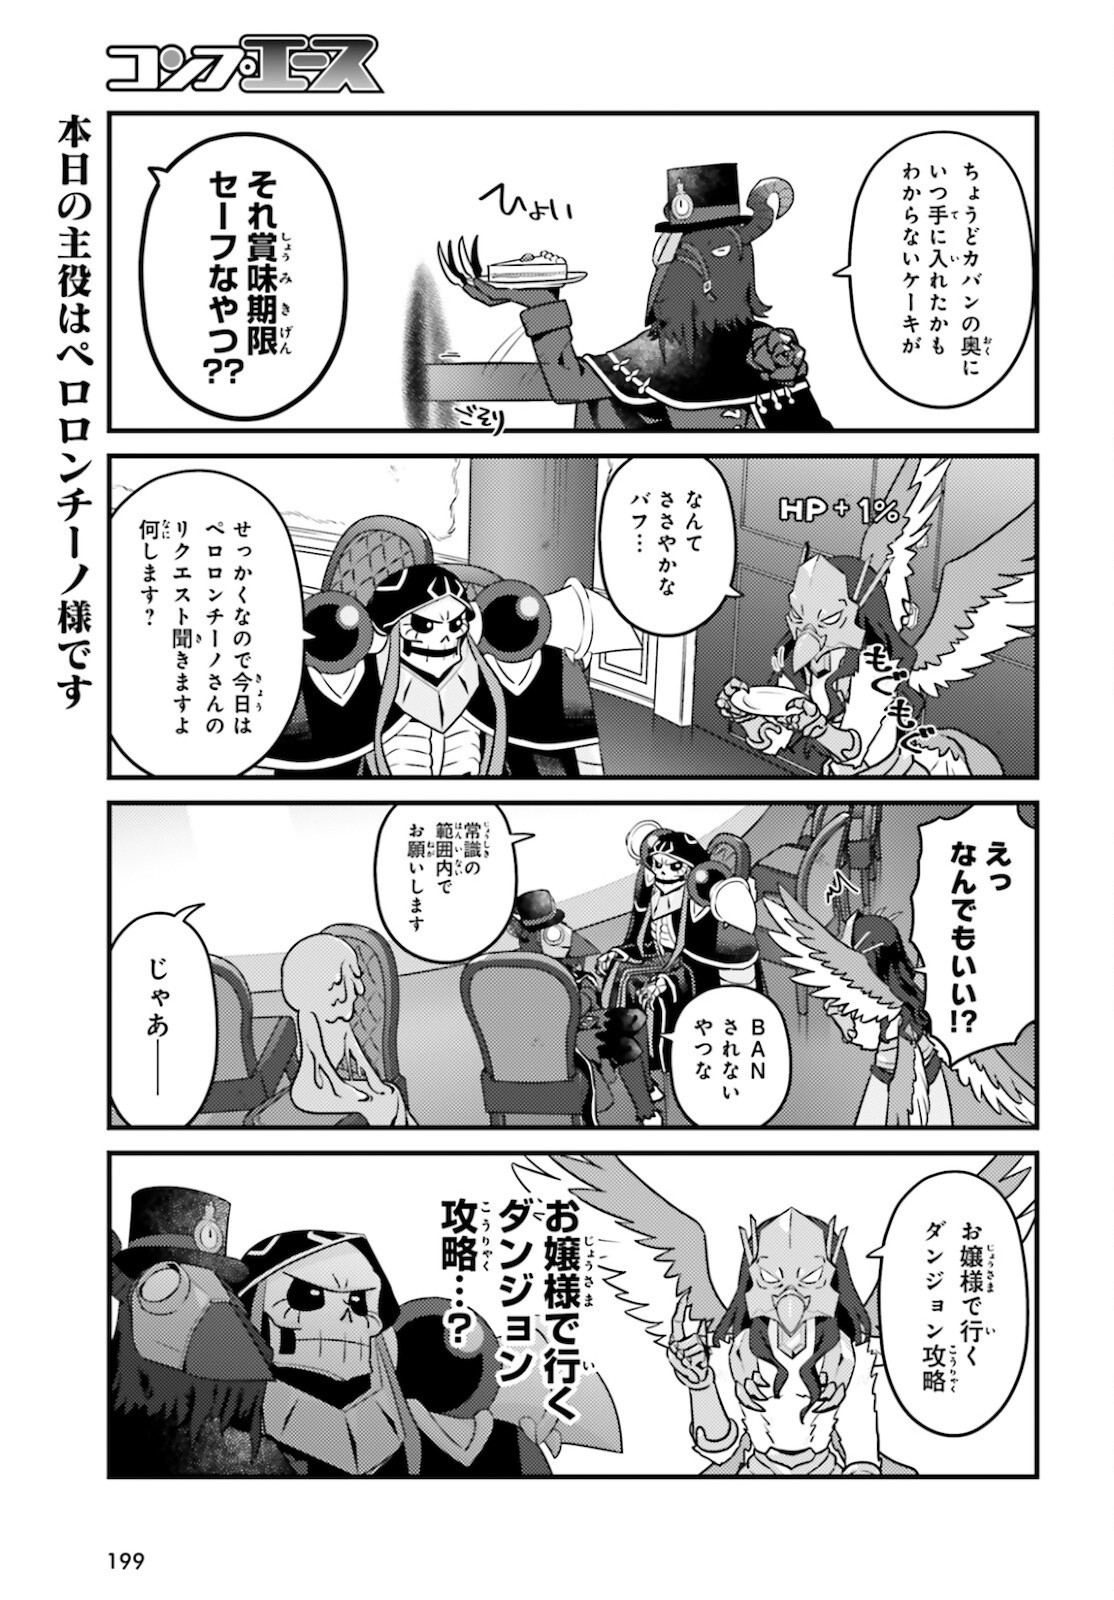 Overlord-Fushisha-no-Oh - Chapter 51 - Page 3